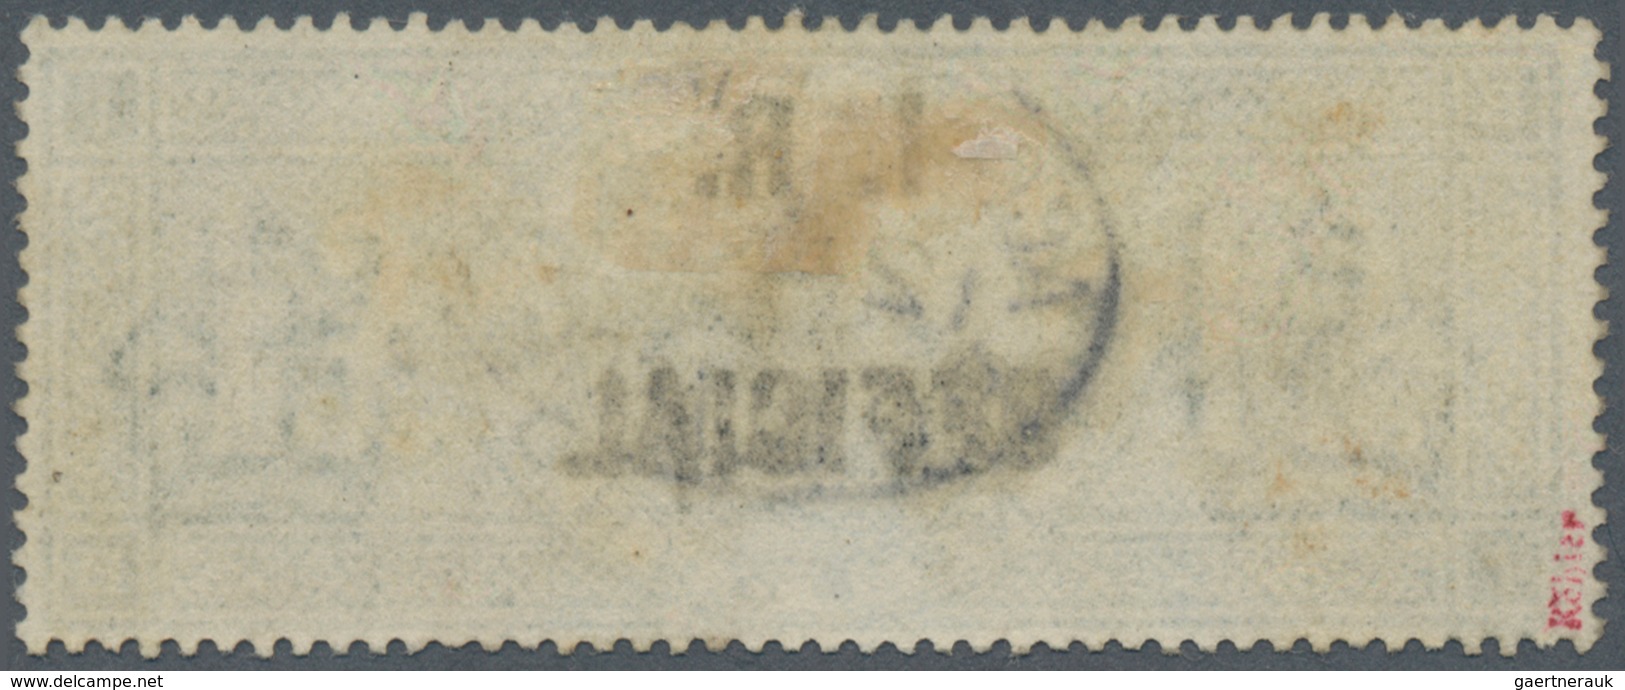 Großbritannien - Dienstmarken: 1892, Inland Revenue, £1 Green, Fresh Colour, Well Perforated, Neatly - Officials